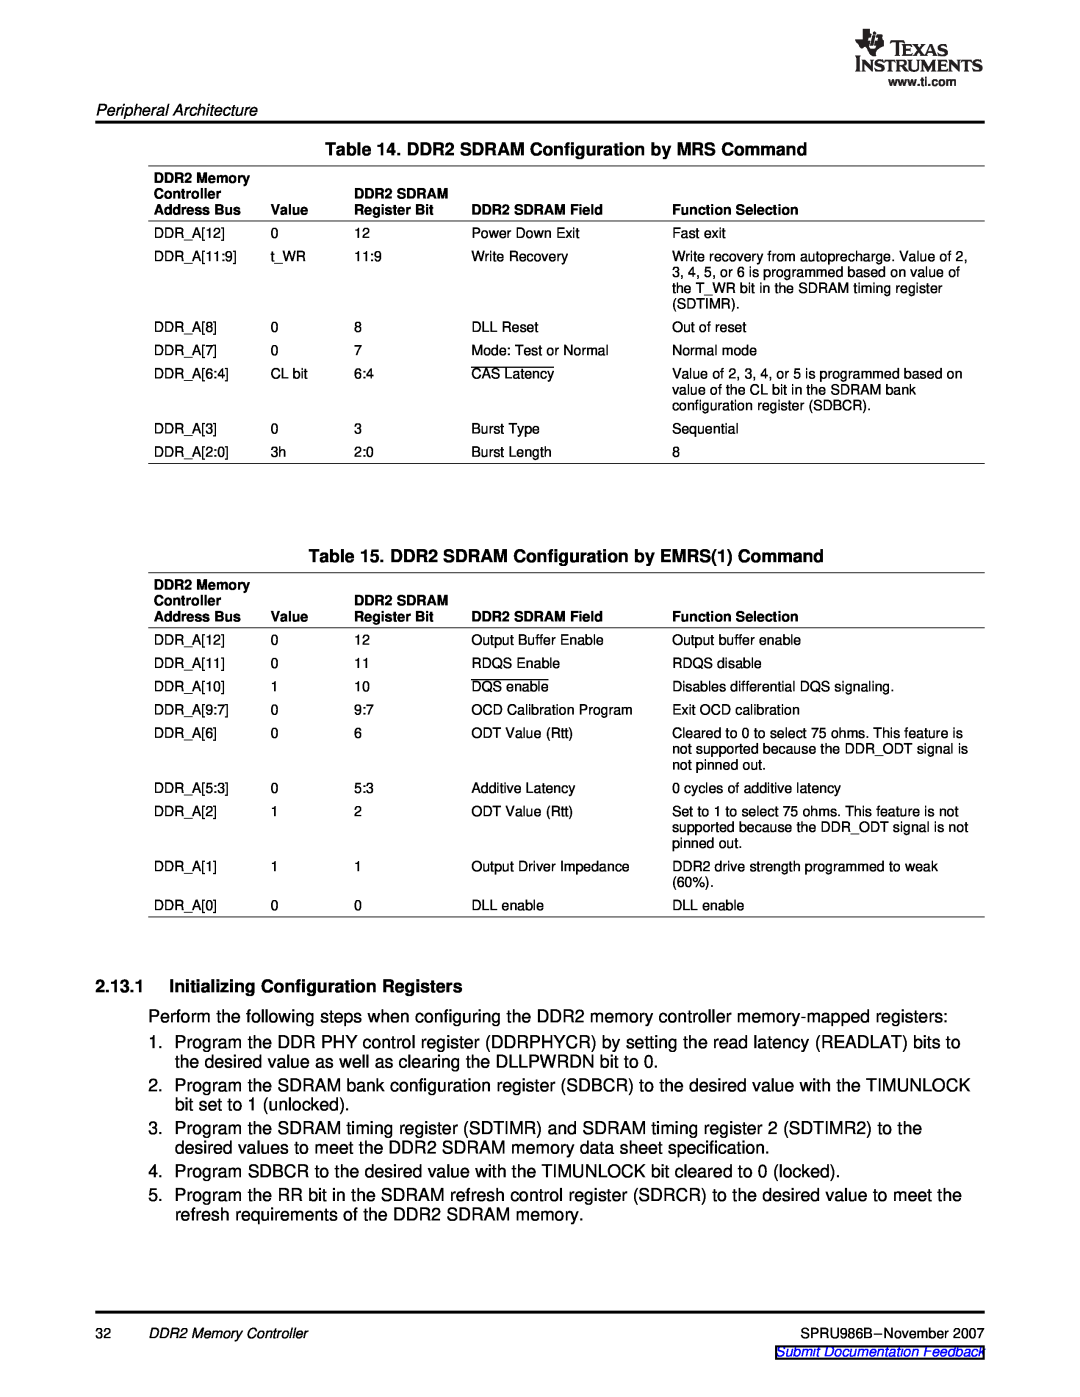 Texas Instruments TMS320DM643 manual DDR2 SDRAM Configuration by MRS Command, DDR2 SDRAM Configuration by EMRS1 Command 